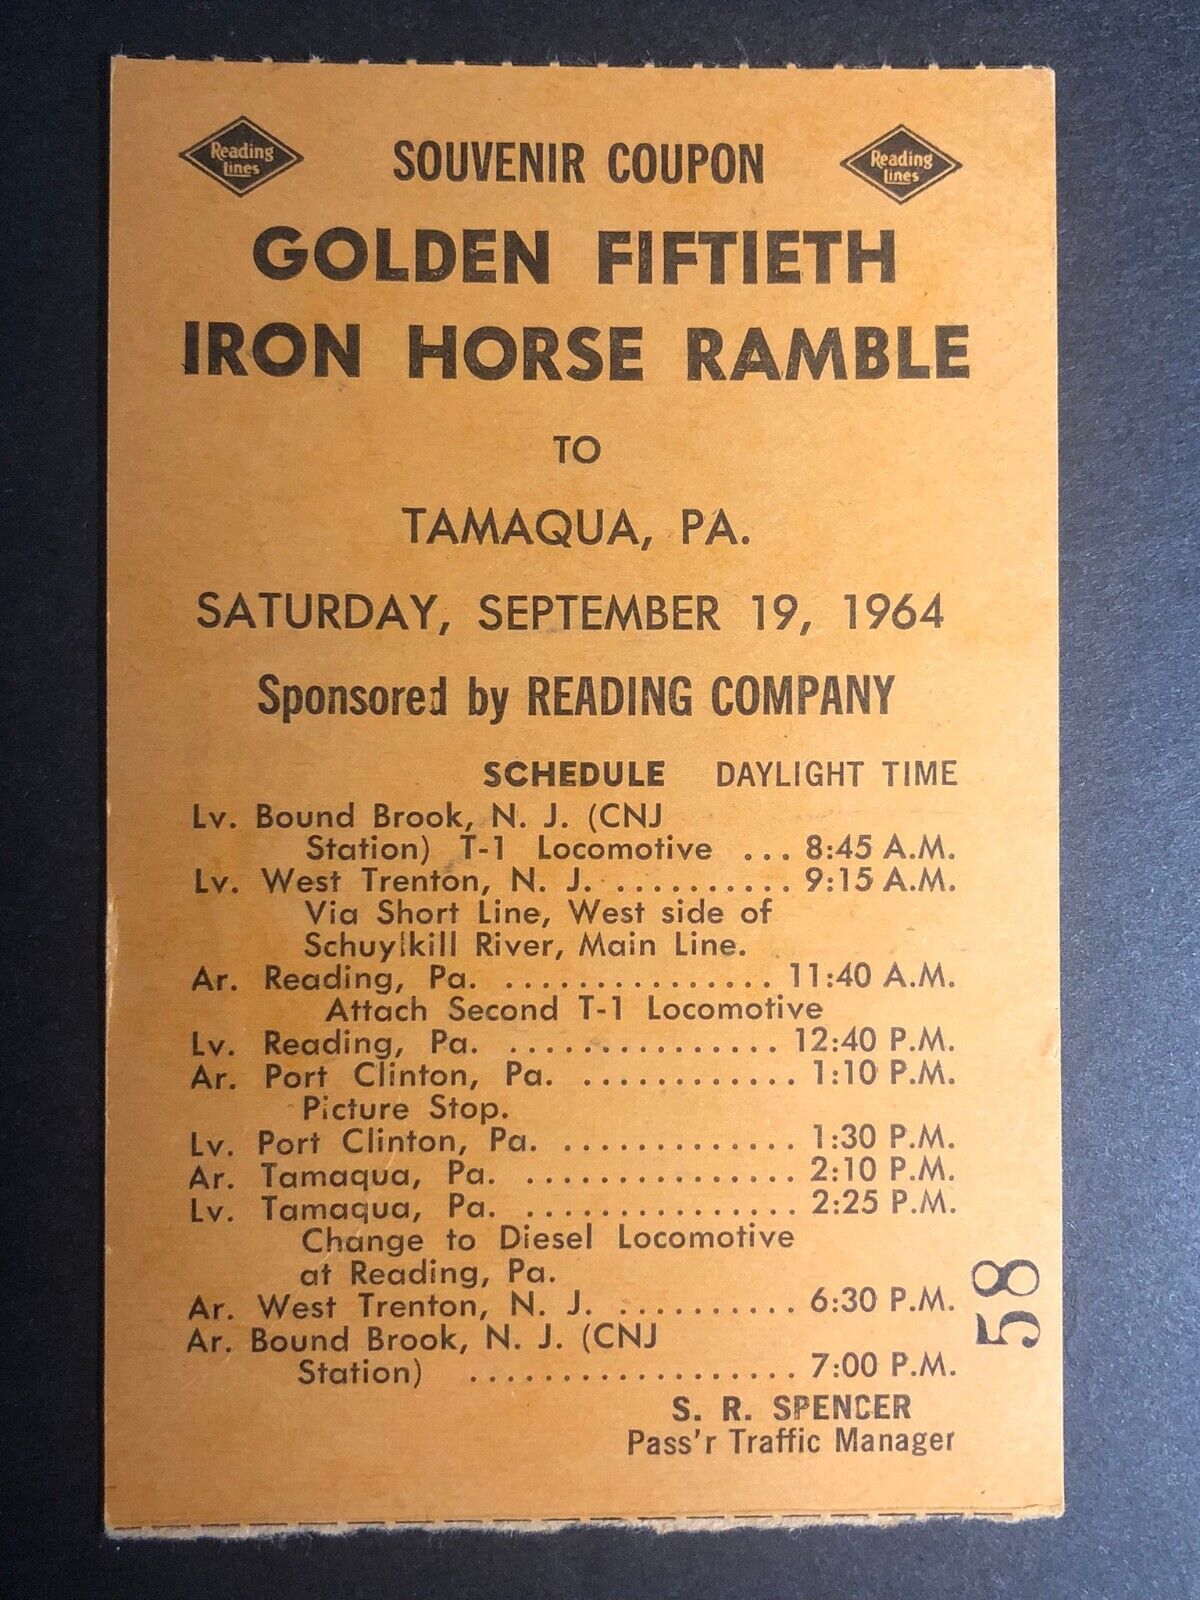 1964 Reading Co\'s Iron Horse Ramble Tamaqua, PA Railroad Coupon / Ticket Stub